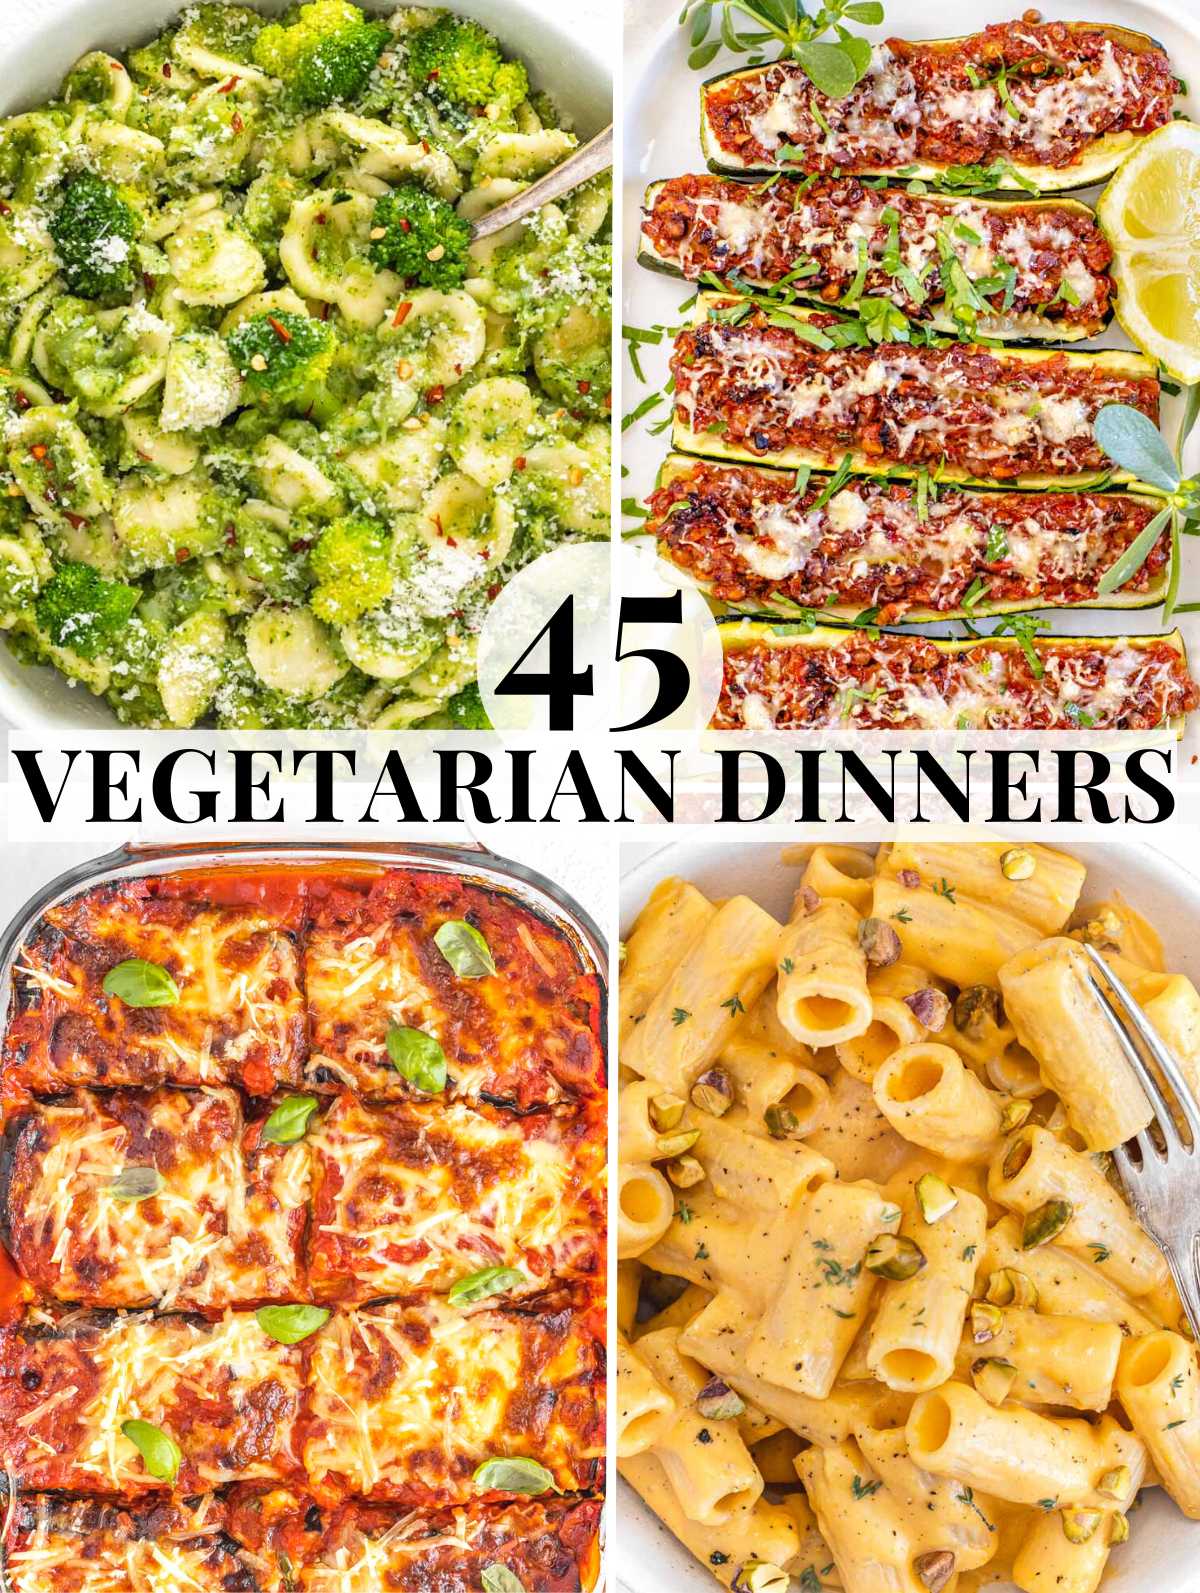 Vegetarian dinner ideas